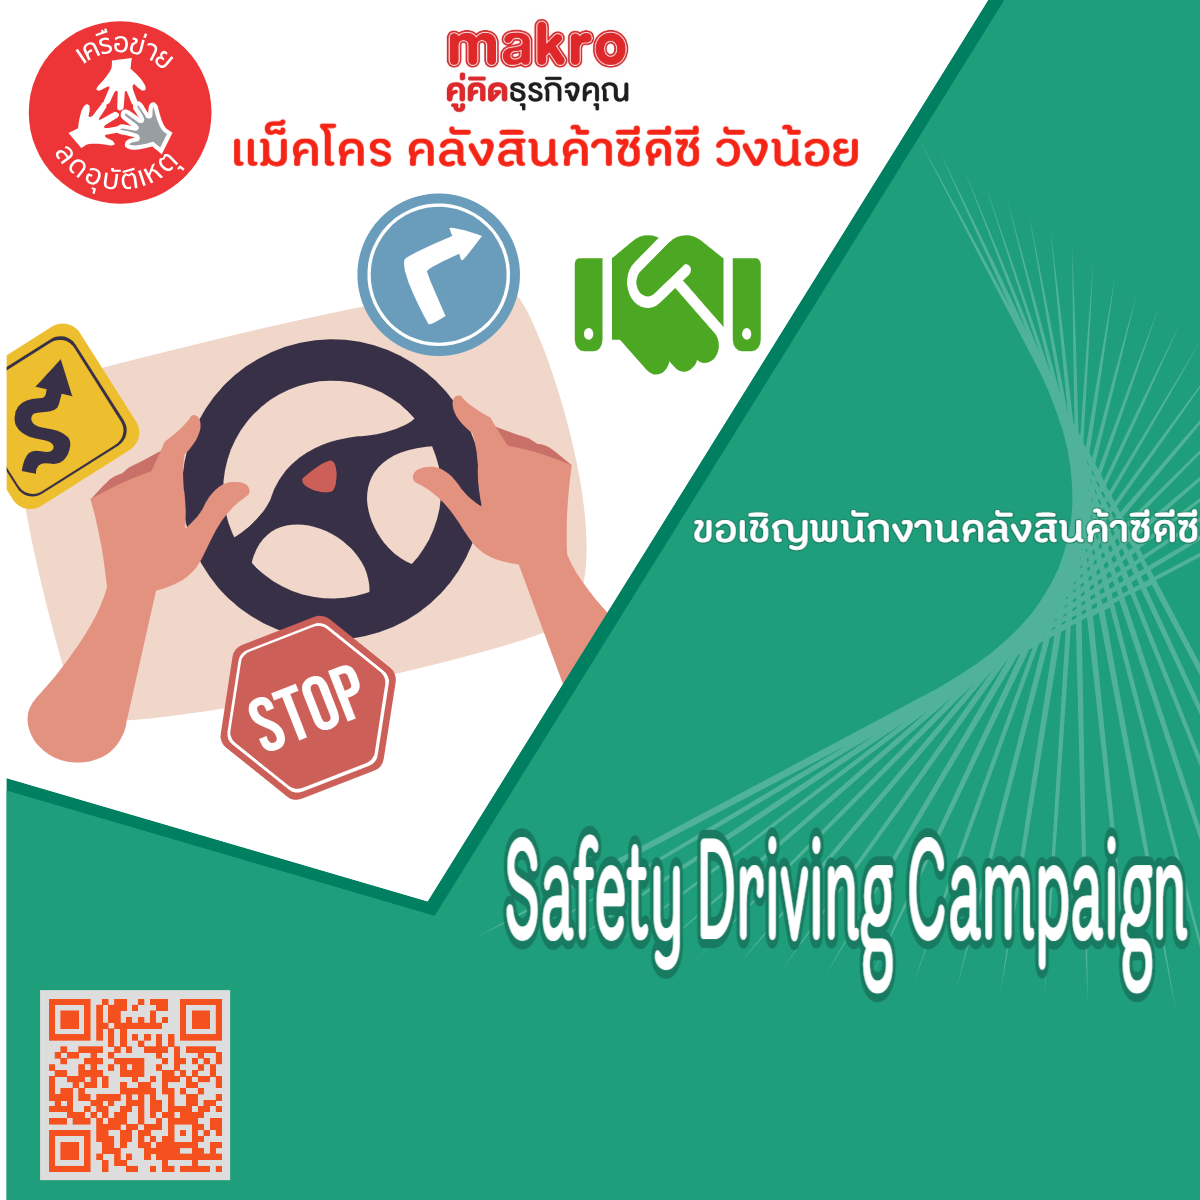 Makro CDC Wangnoi Safety Driving